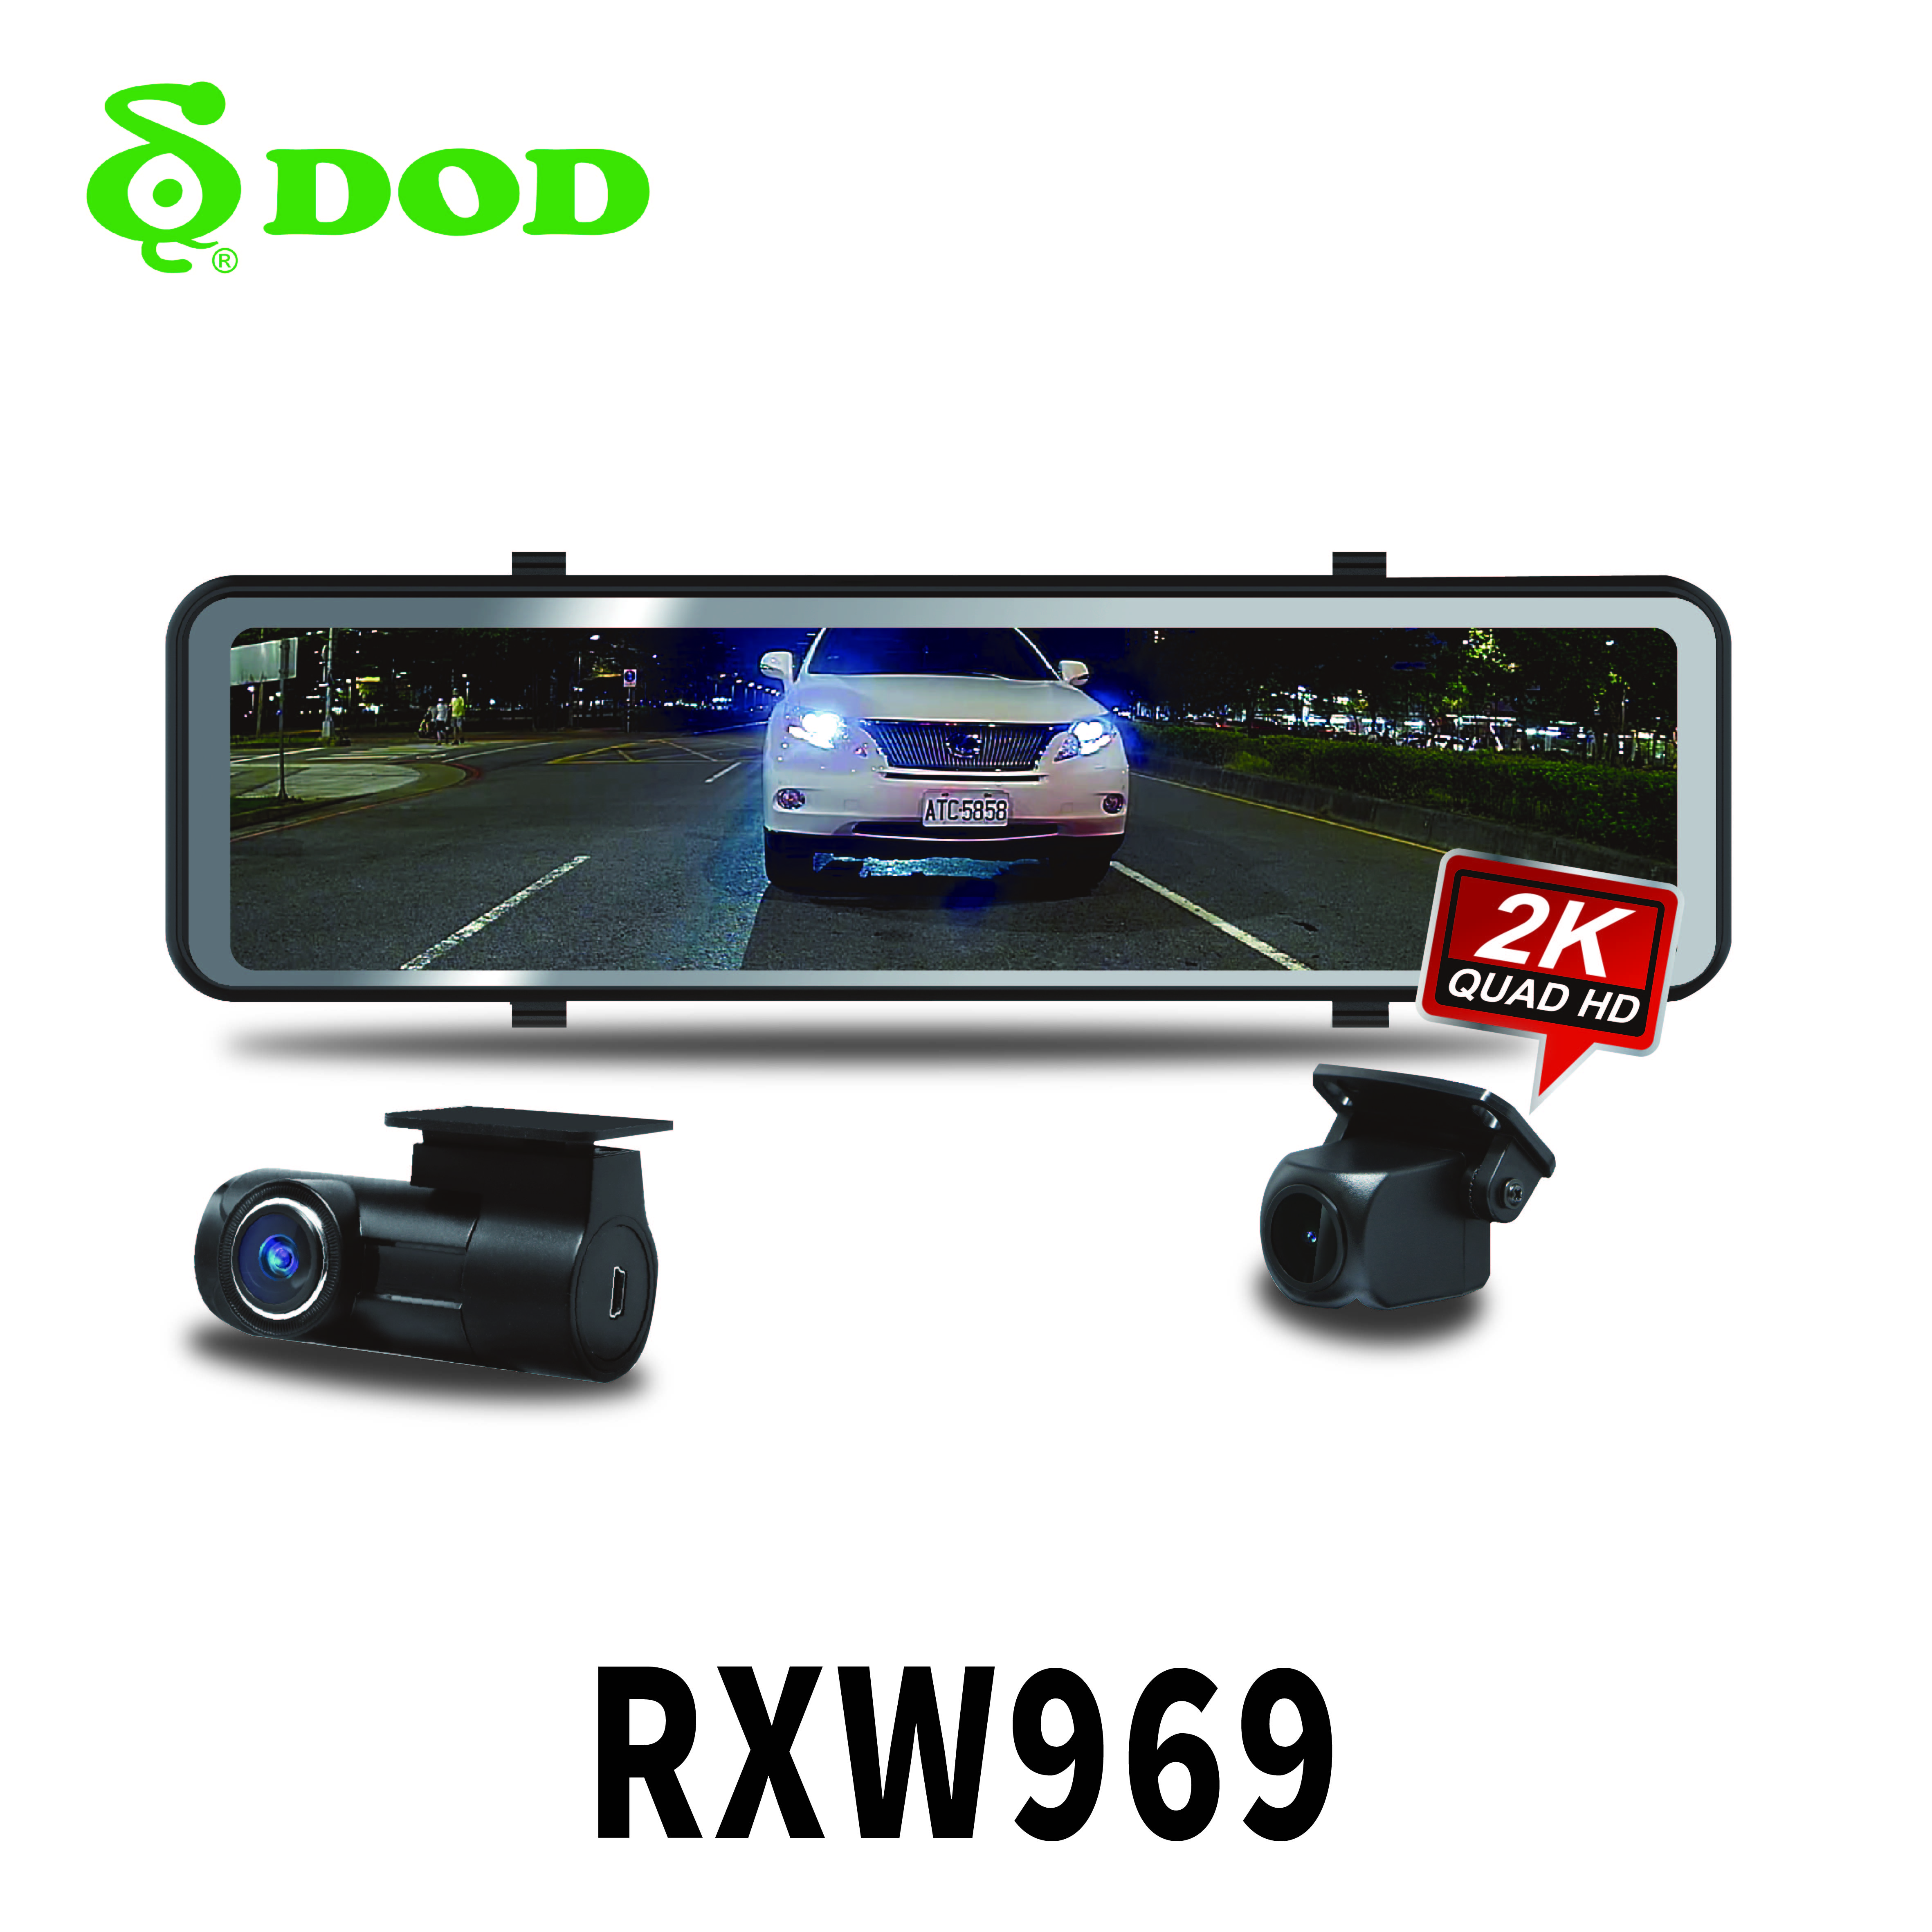 DOD RXW969 1440p GPS 雙鏡頭行車記錄器